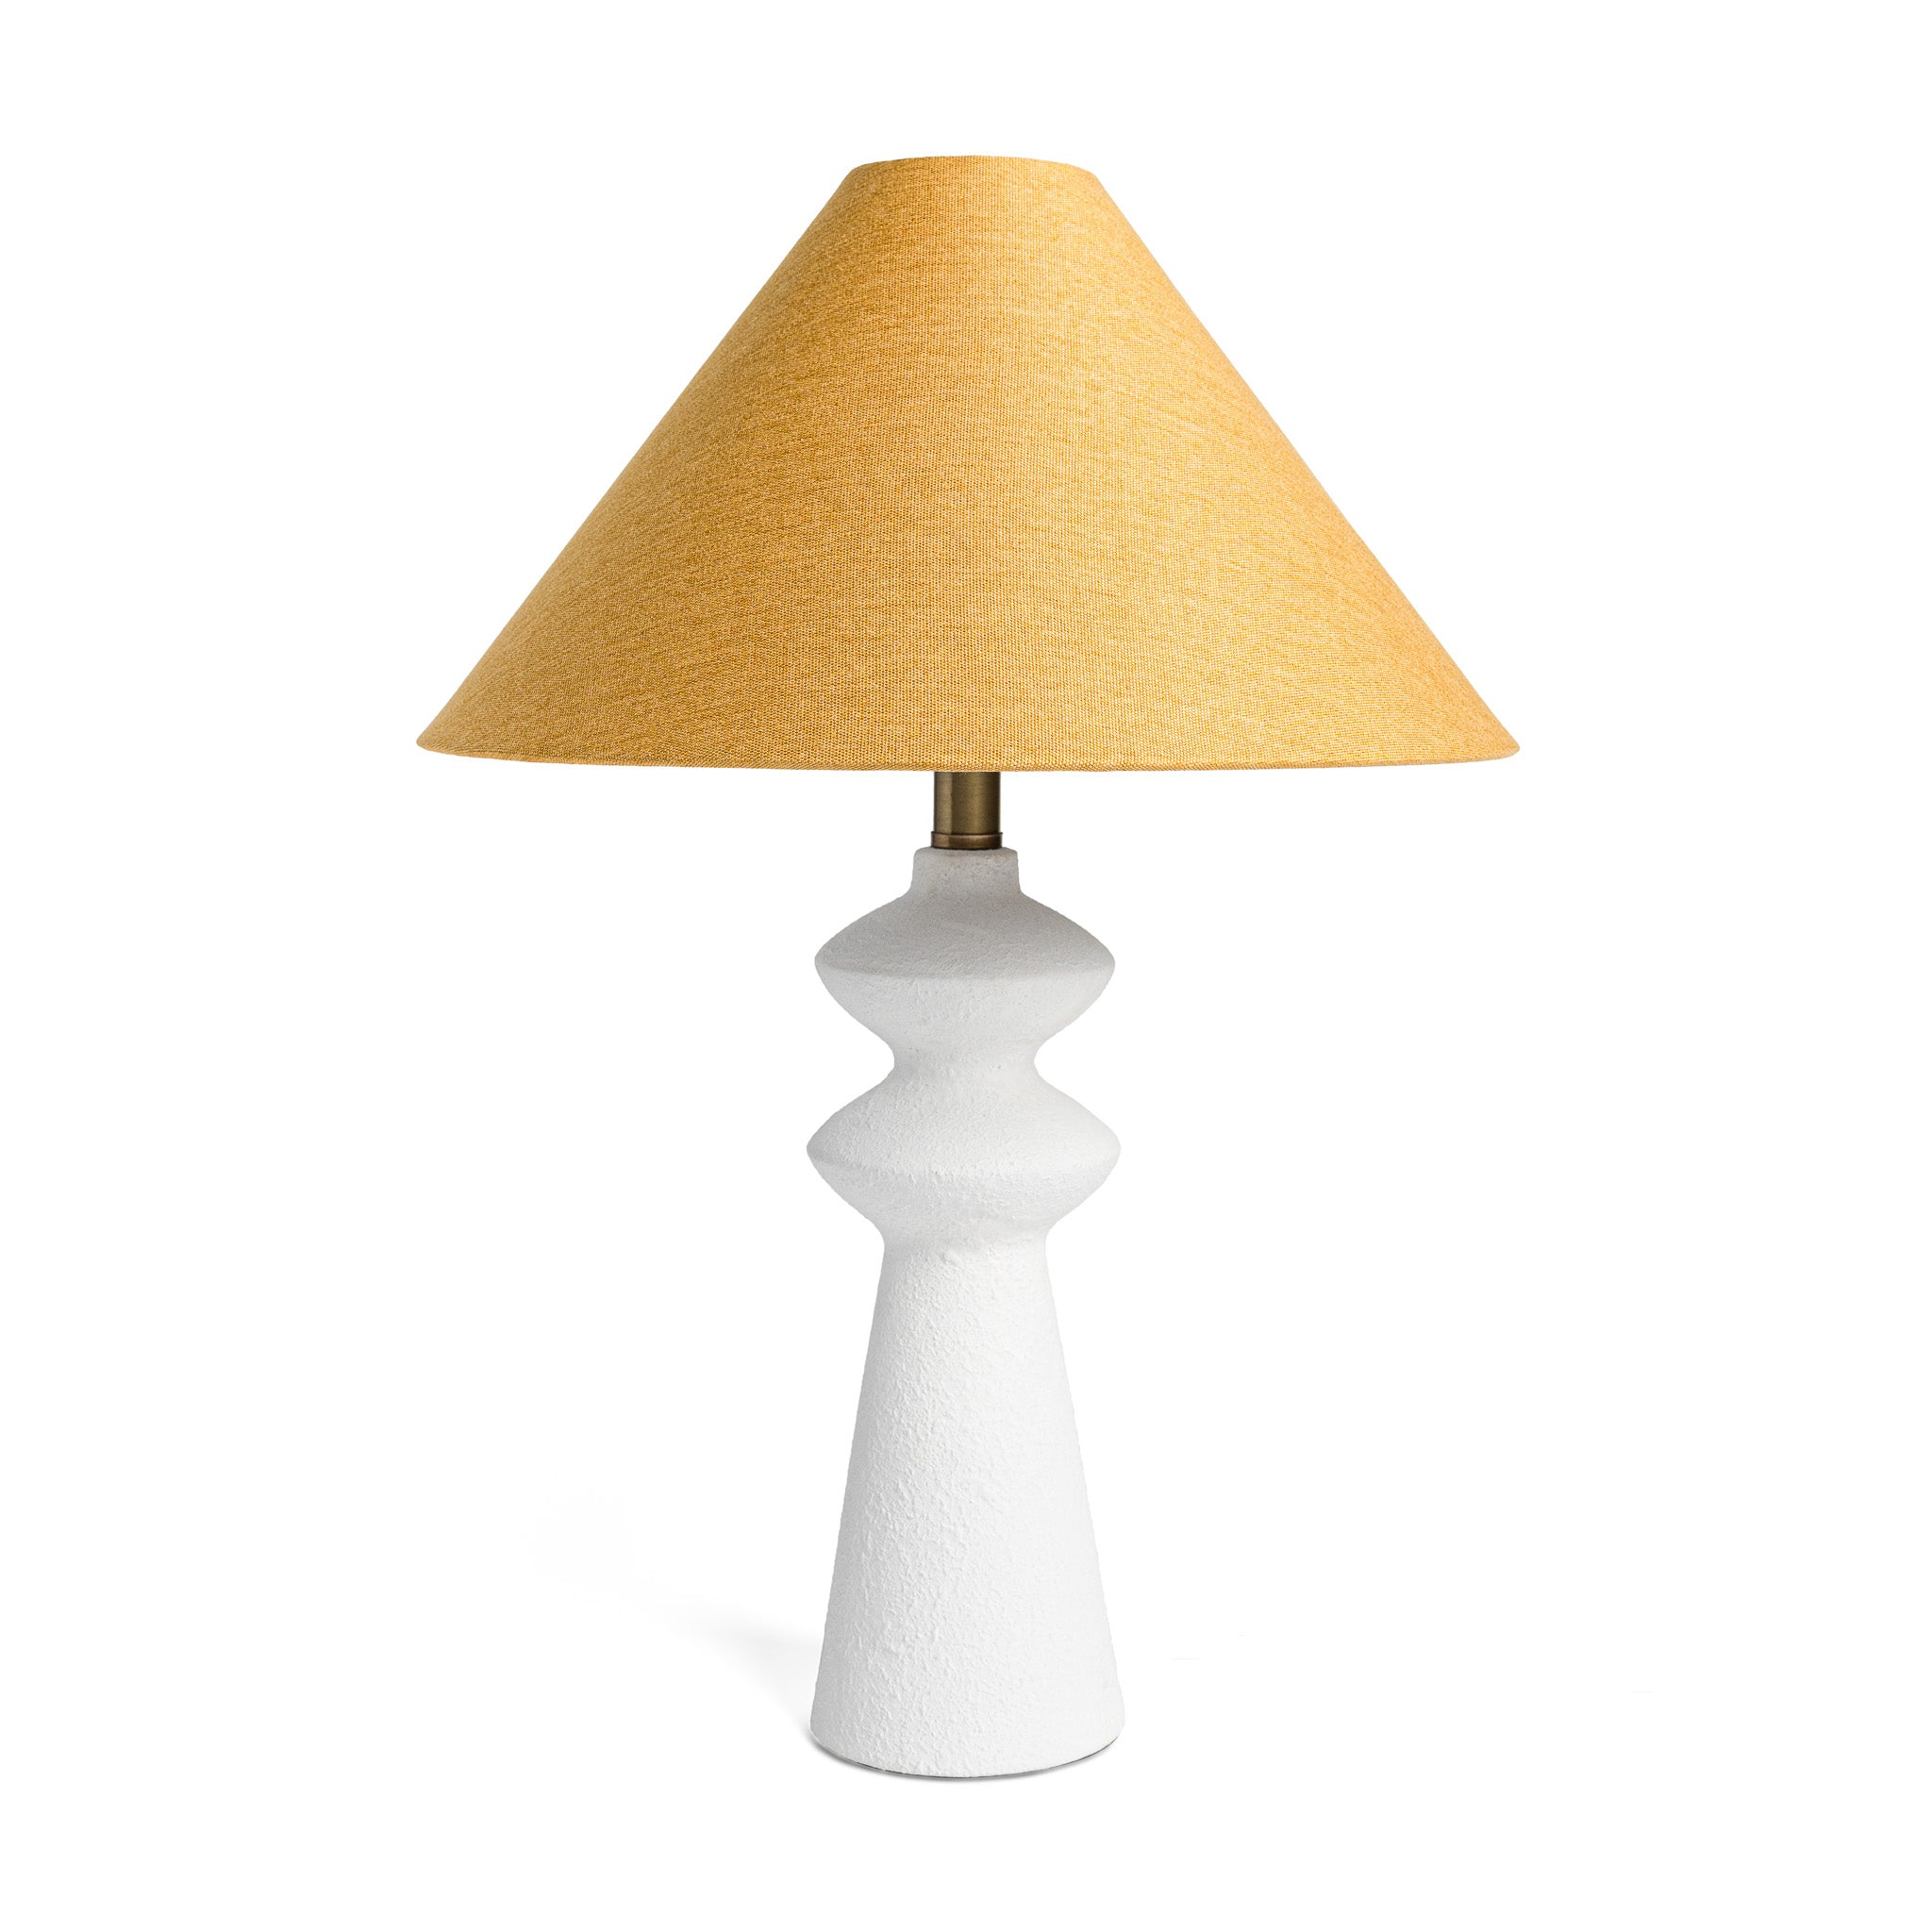 Henrik Table Lamp in White in Lighting by Maven Lane